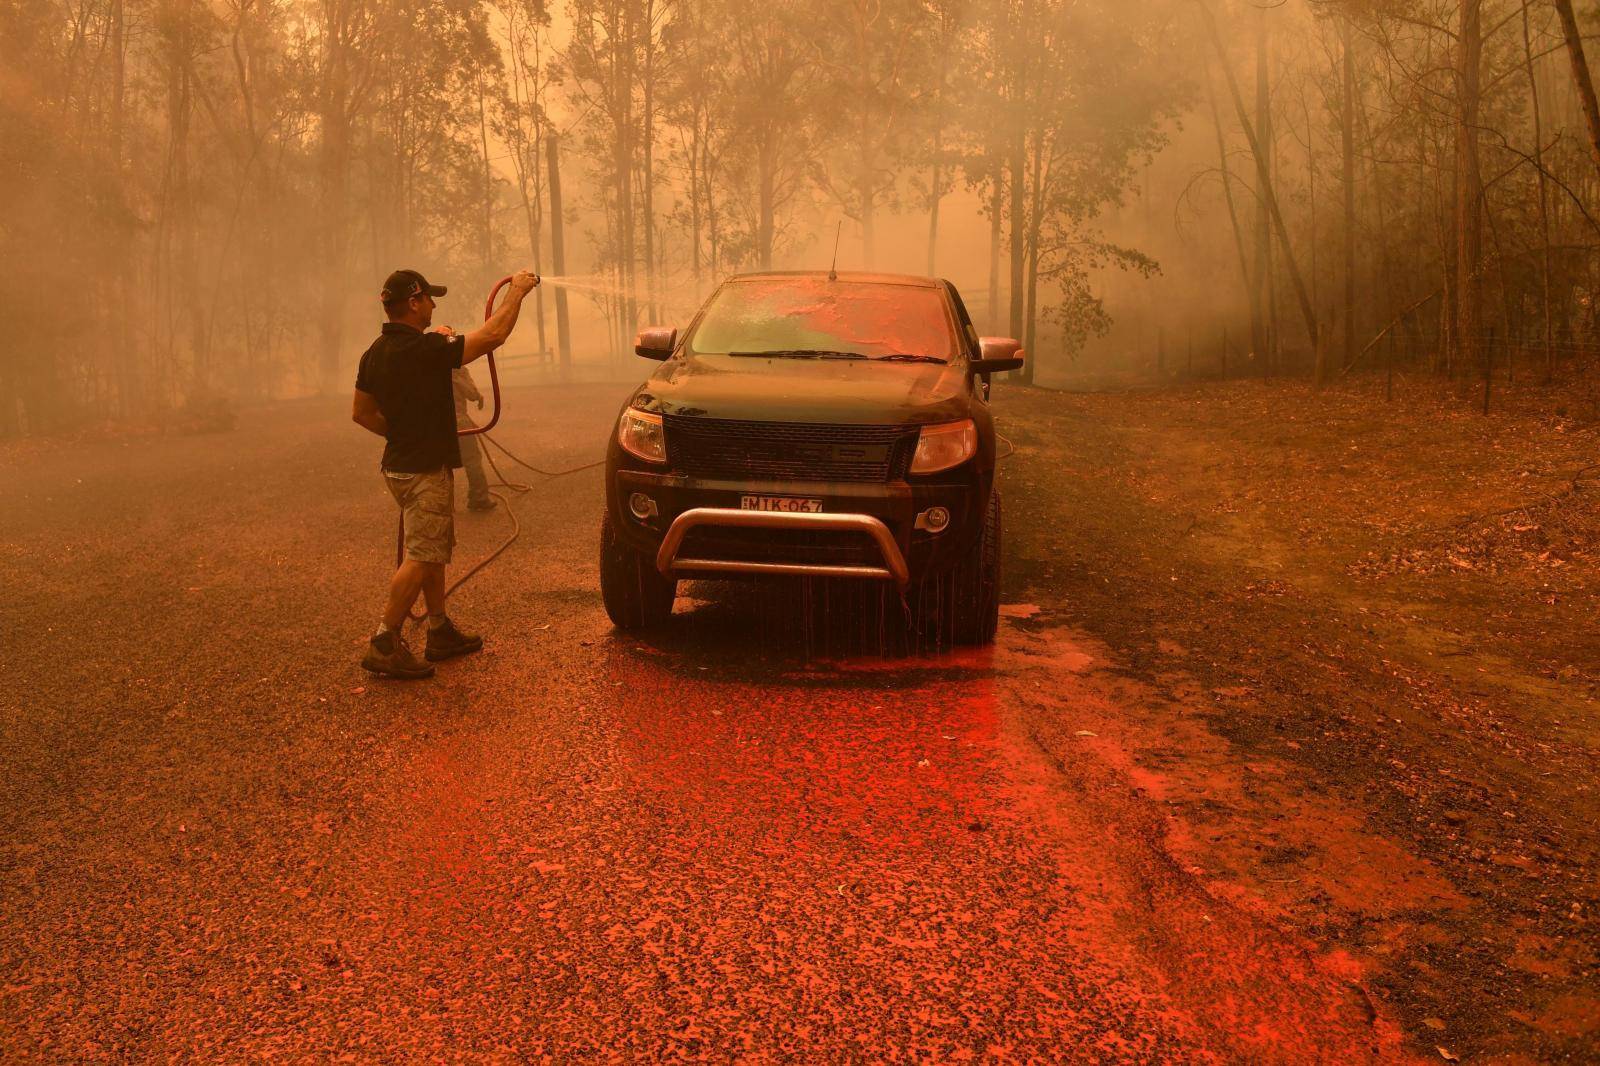 A local man hoses down fire retardant during a bushfire in Werombi, 50 km southwest of Sydney